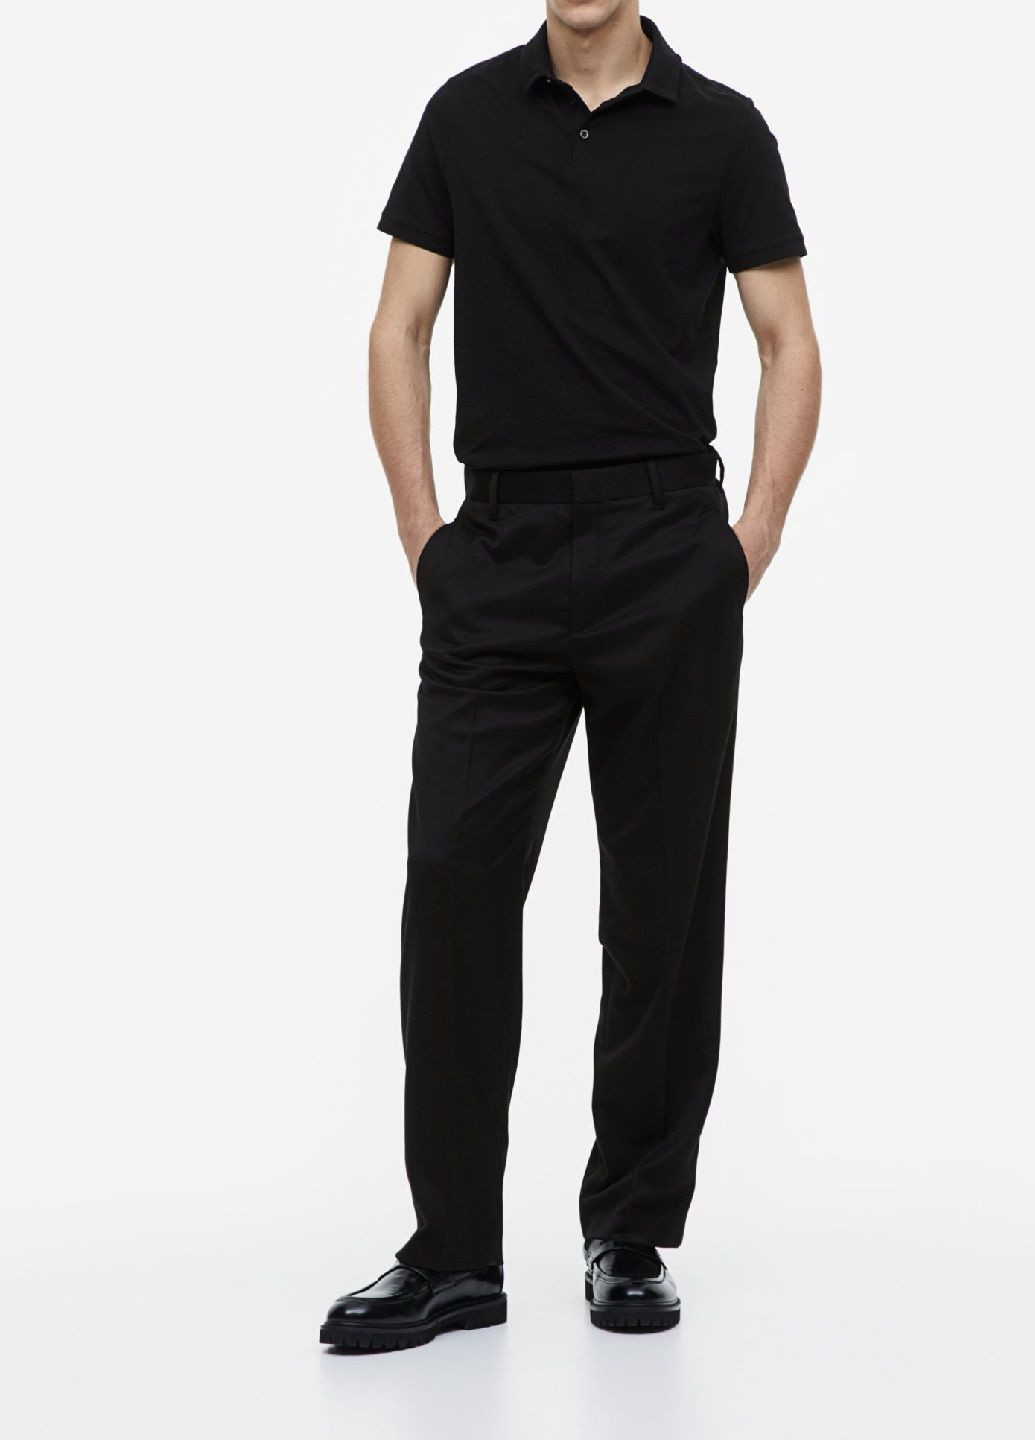 Черная футболка-футболка для мужчин H&M